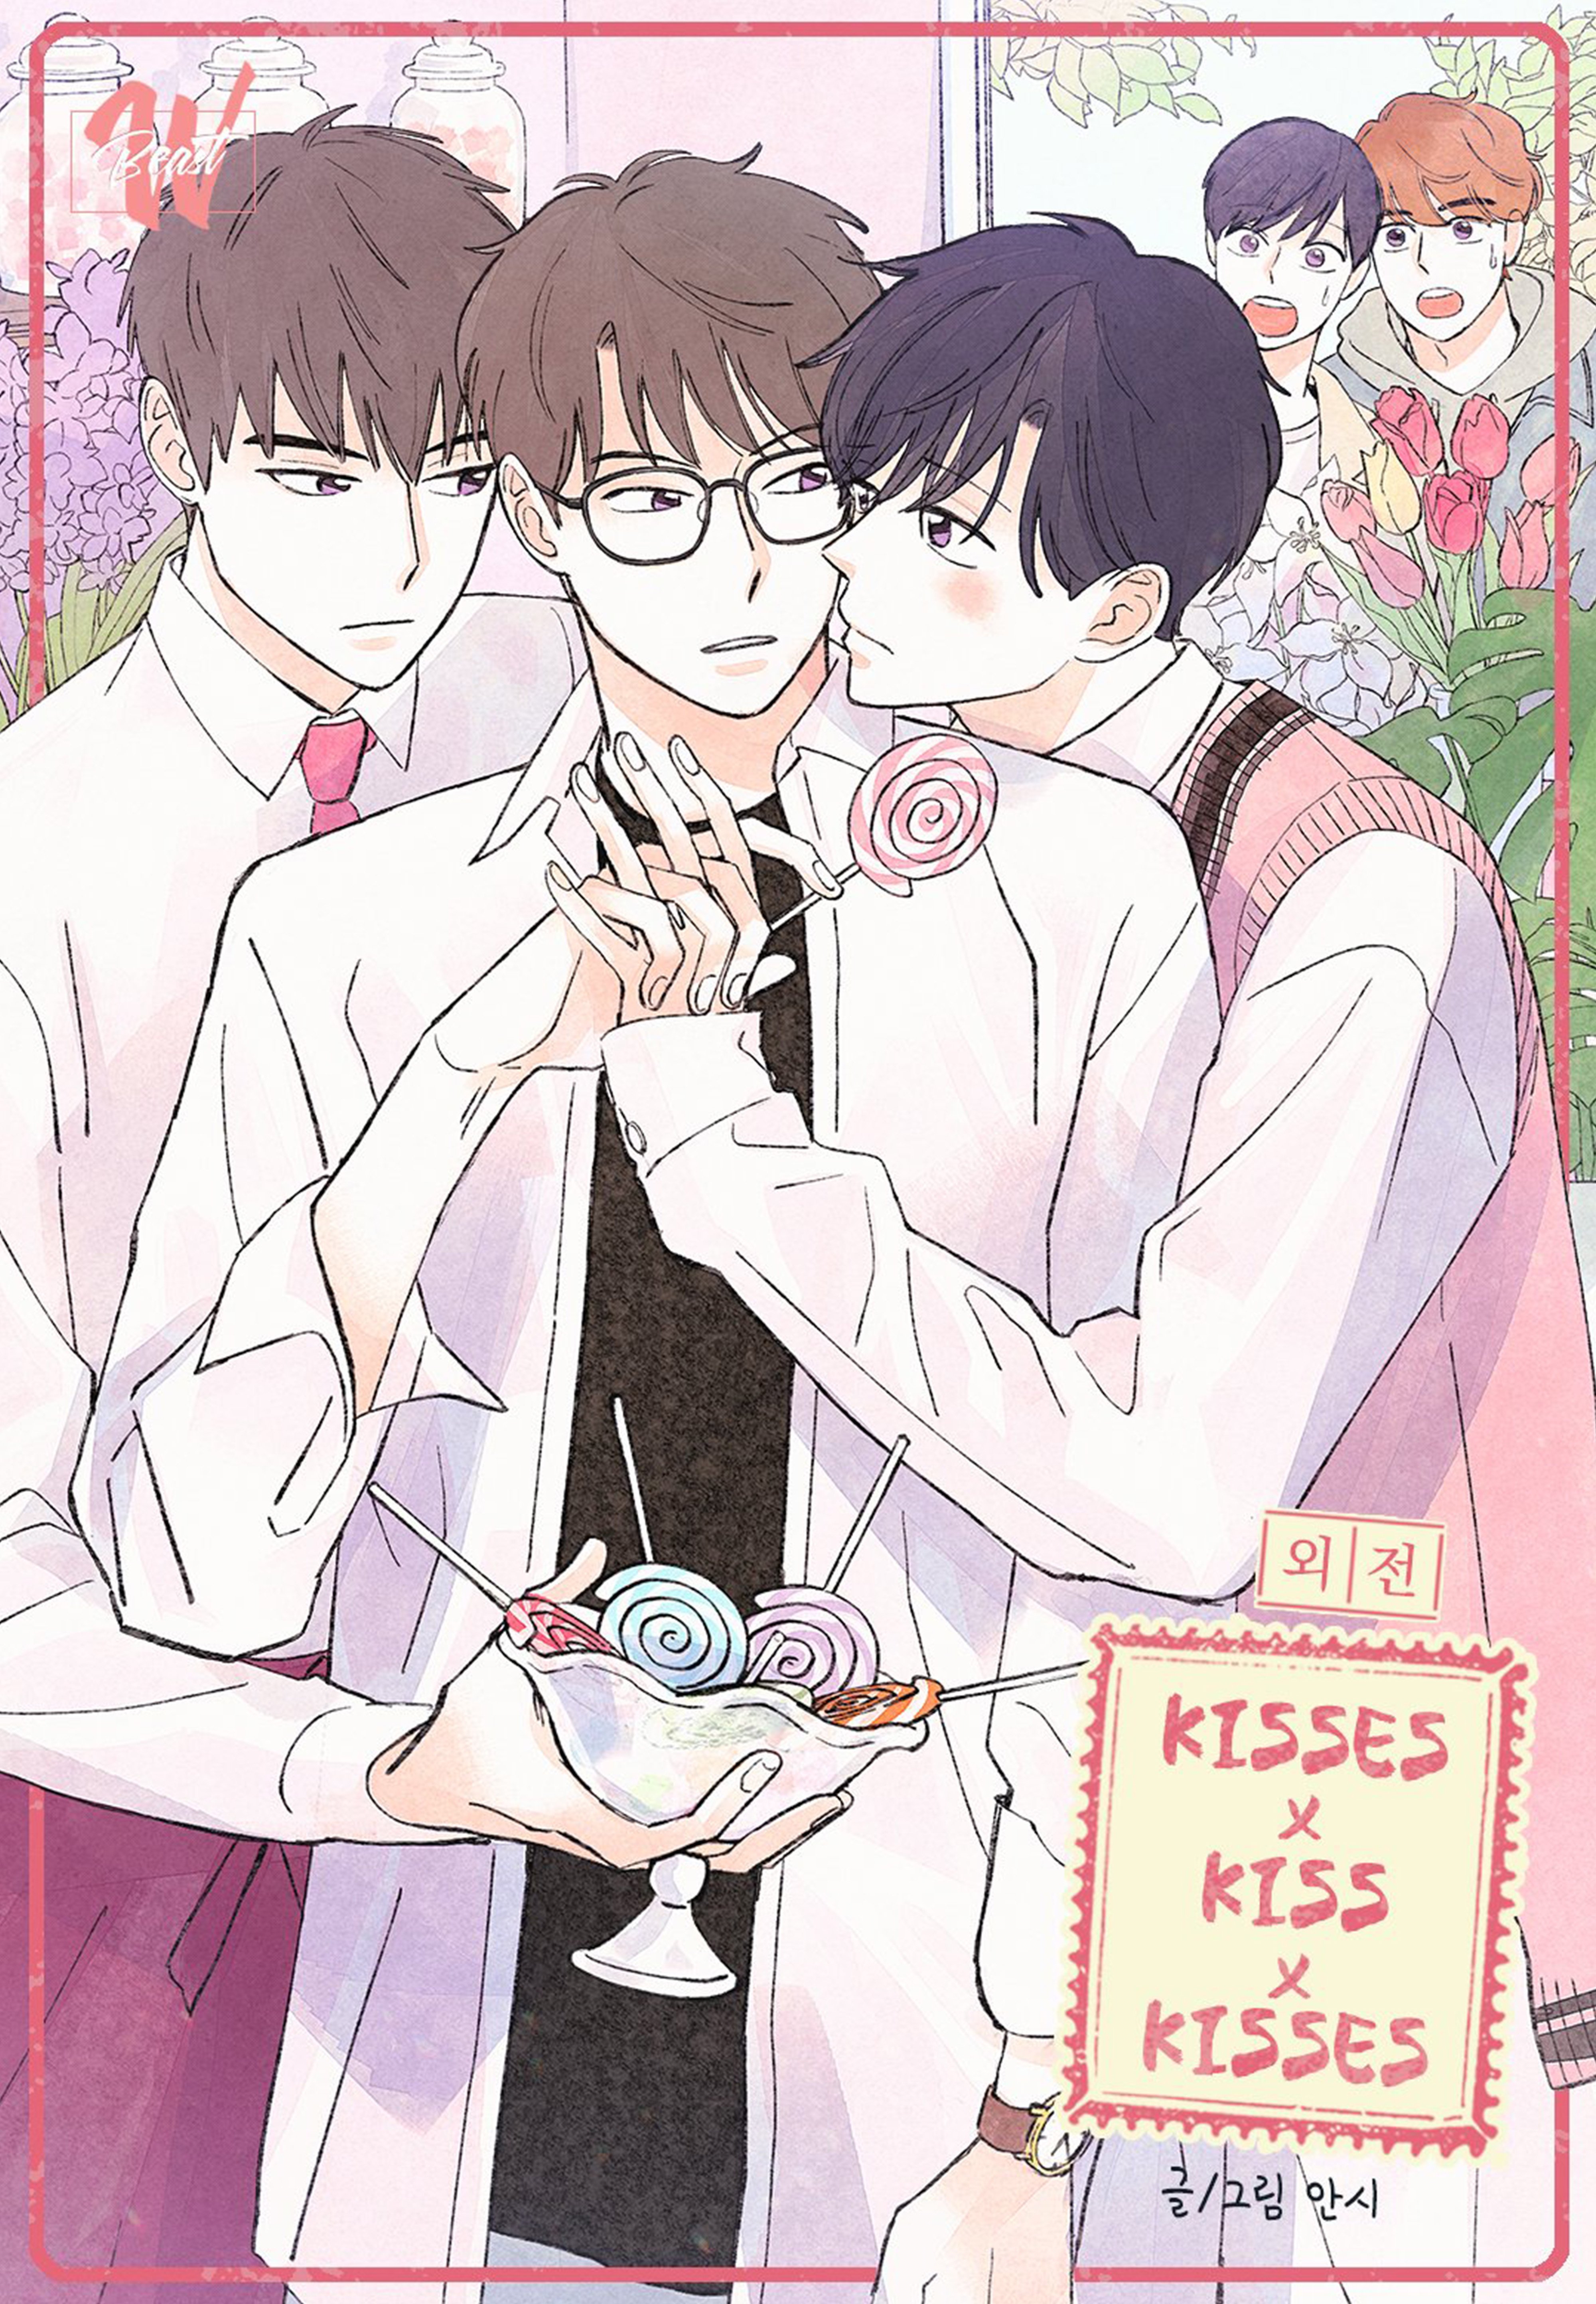 Kisses x Kiss x Kisses - chapter 70 - #2